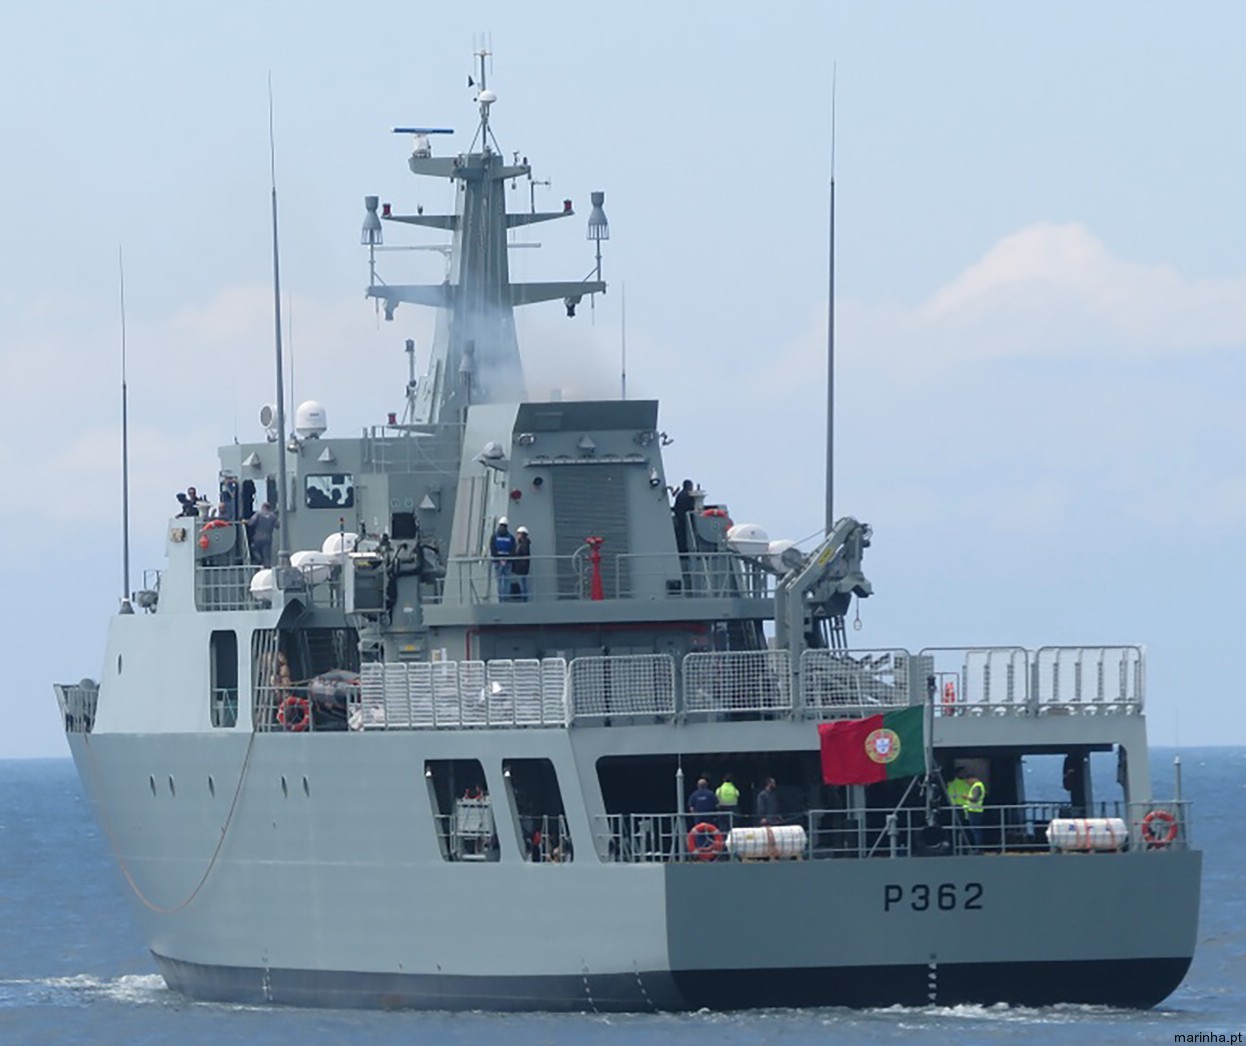 p-362 nrp sines viana do castelo class offshore patrol vessel opv portuguese navy marinha 03